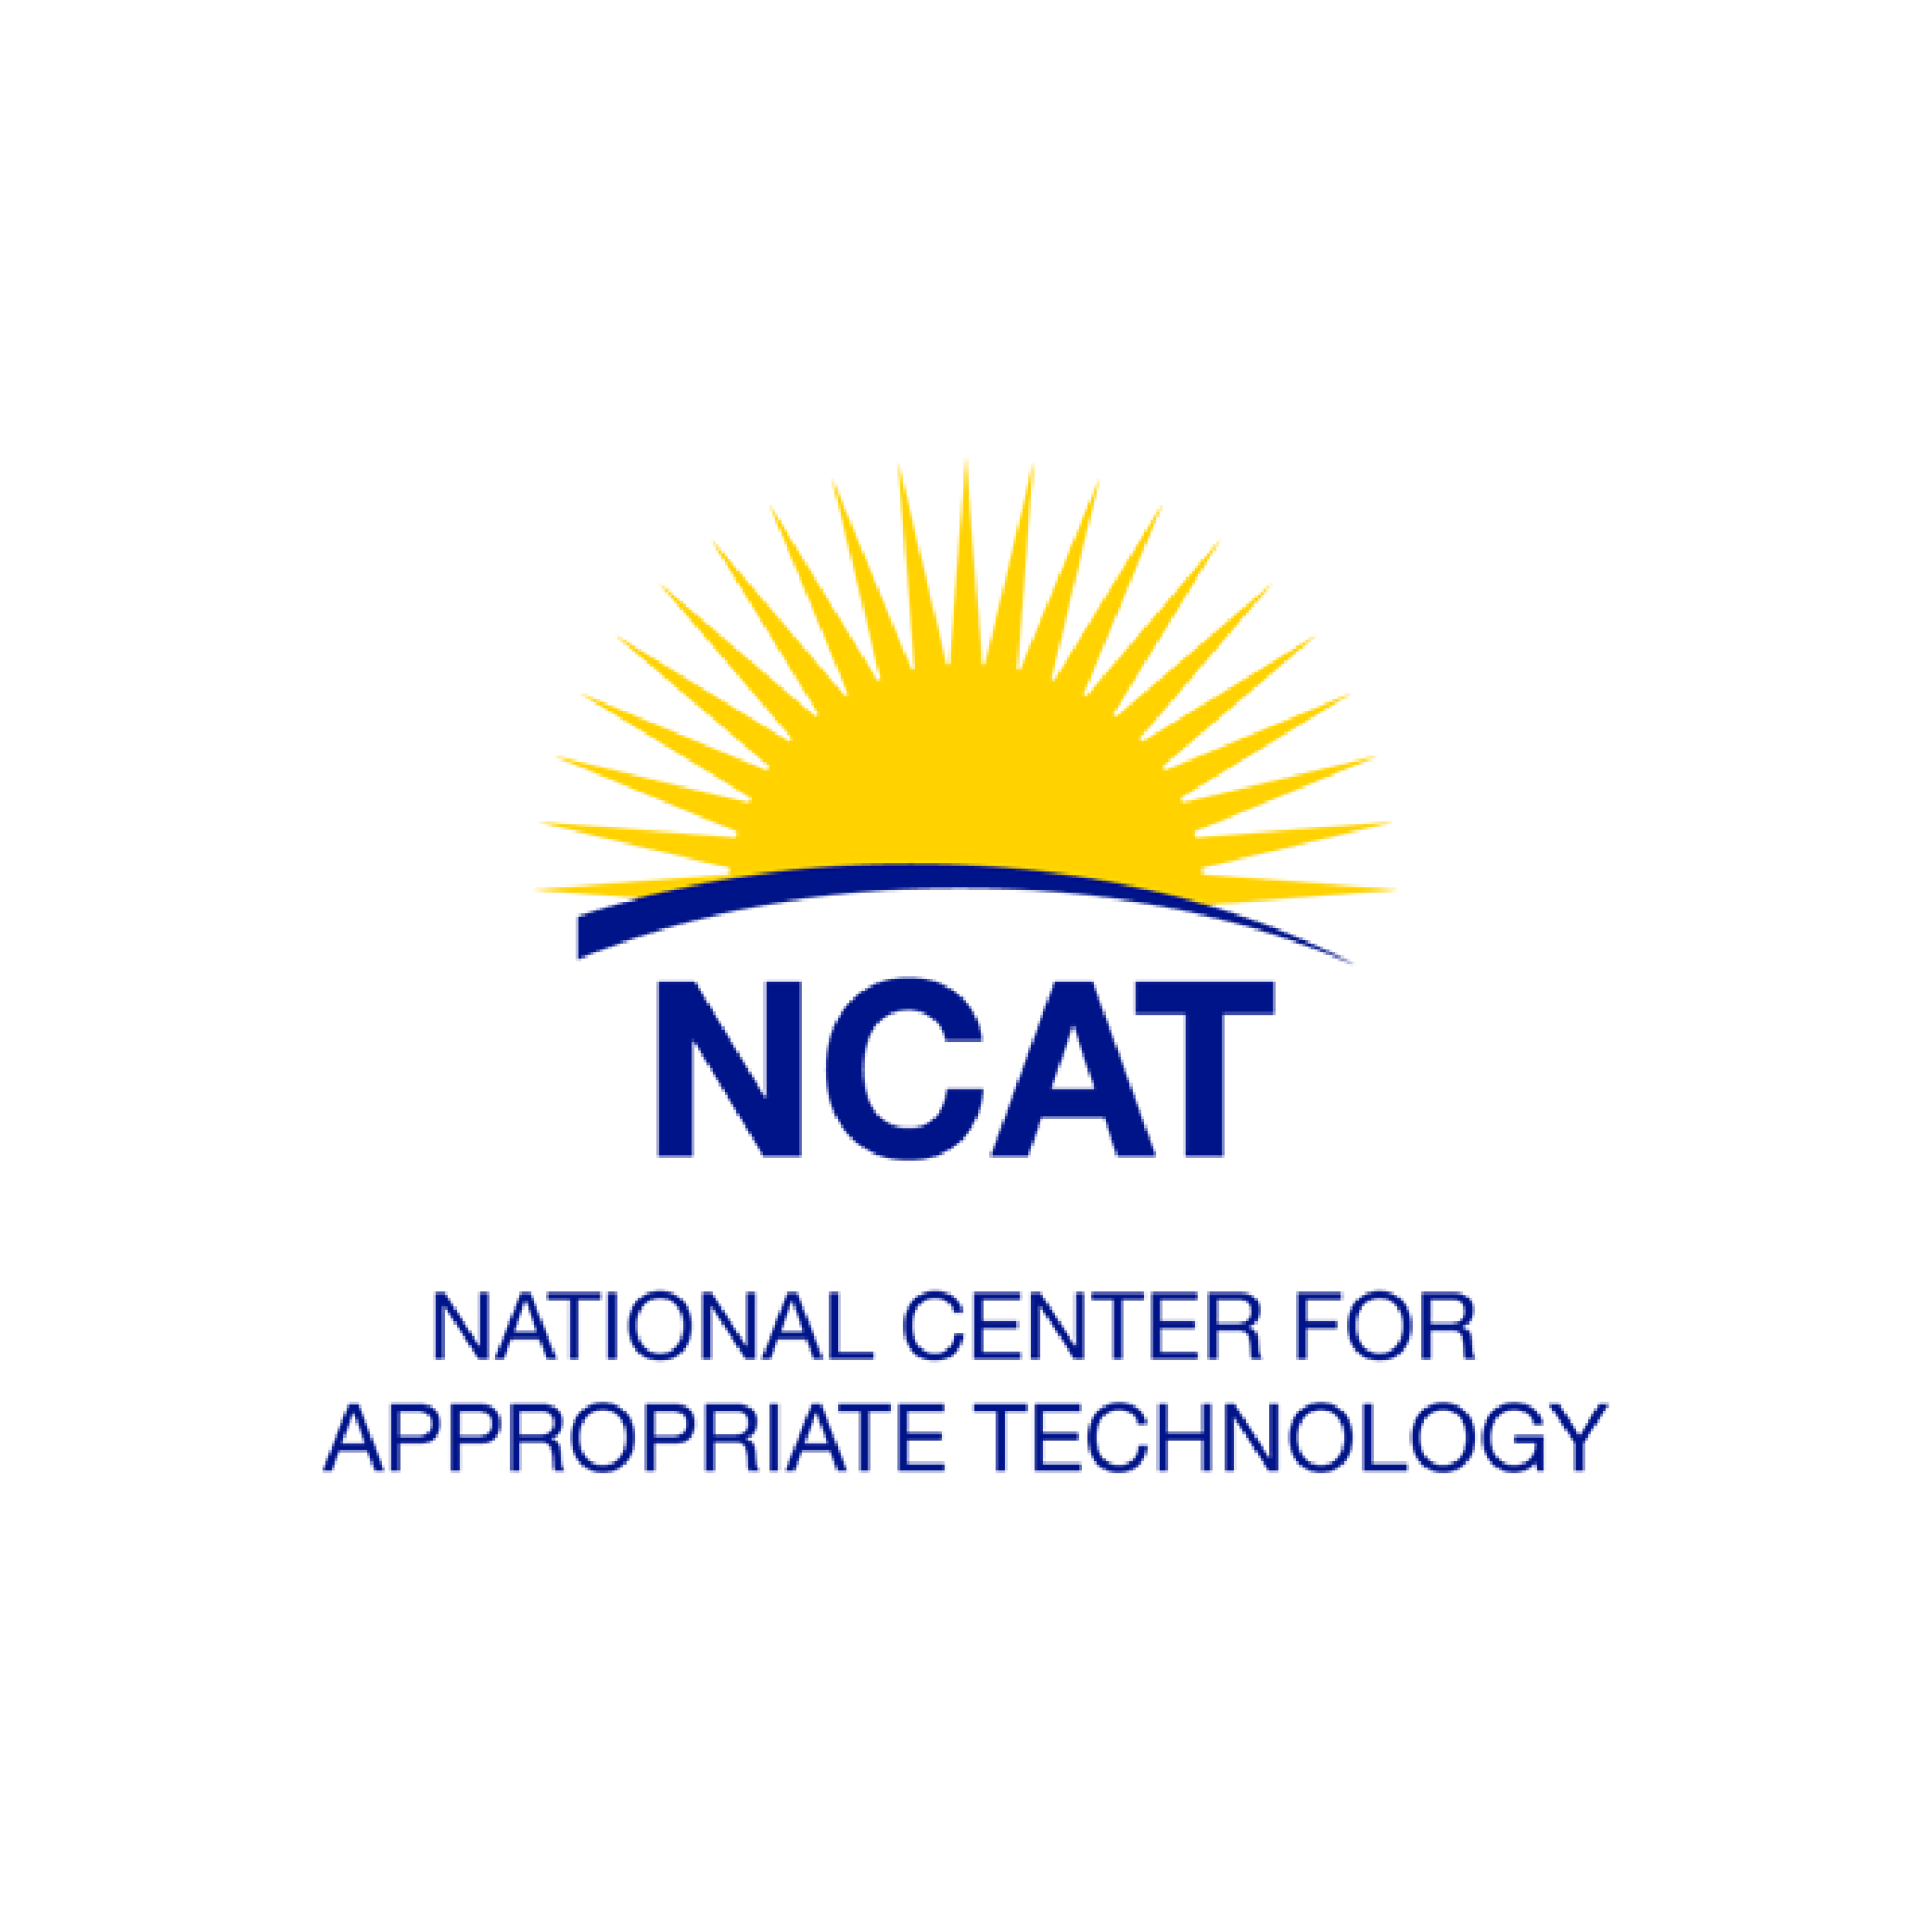 NCAT - National Center for Appropriate Technology Logo